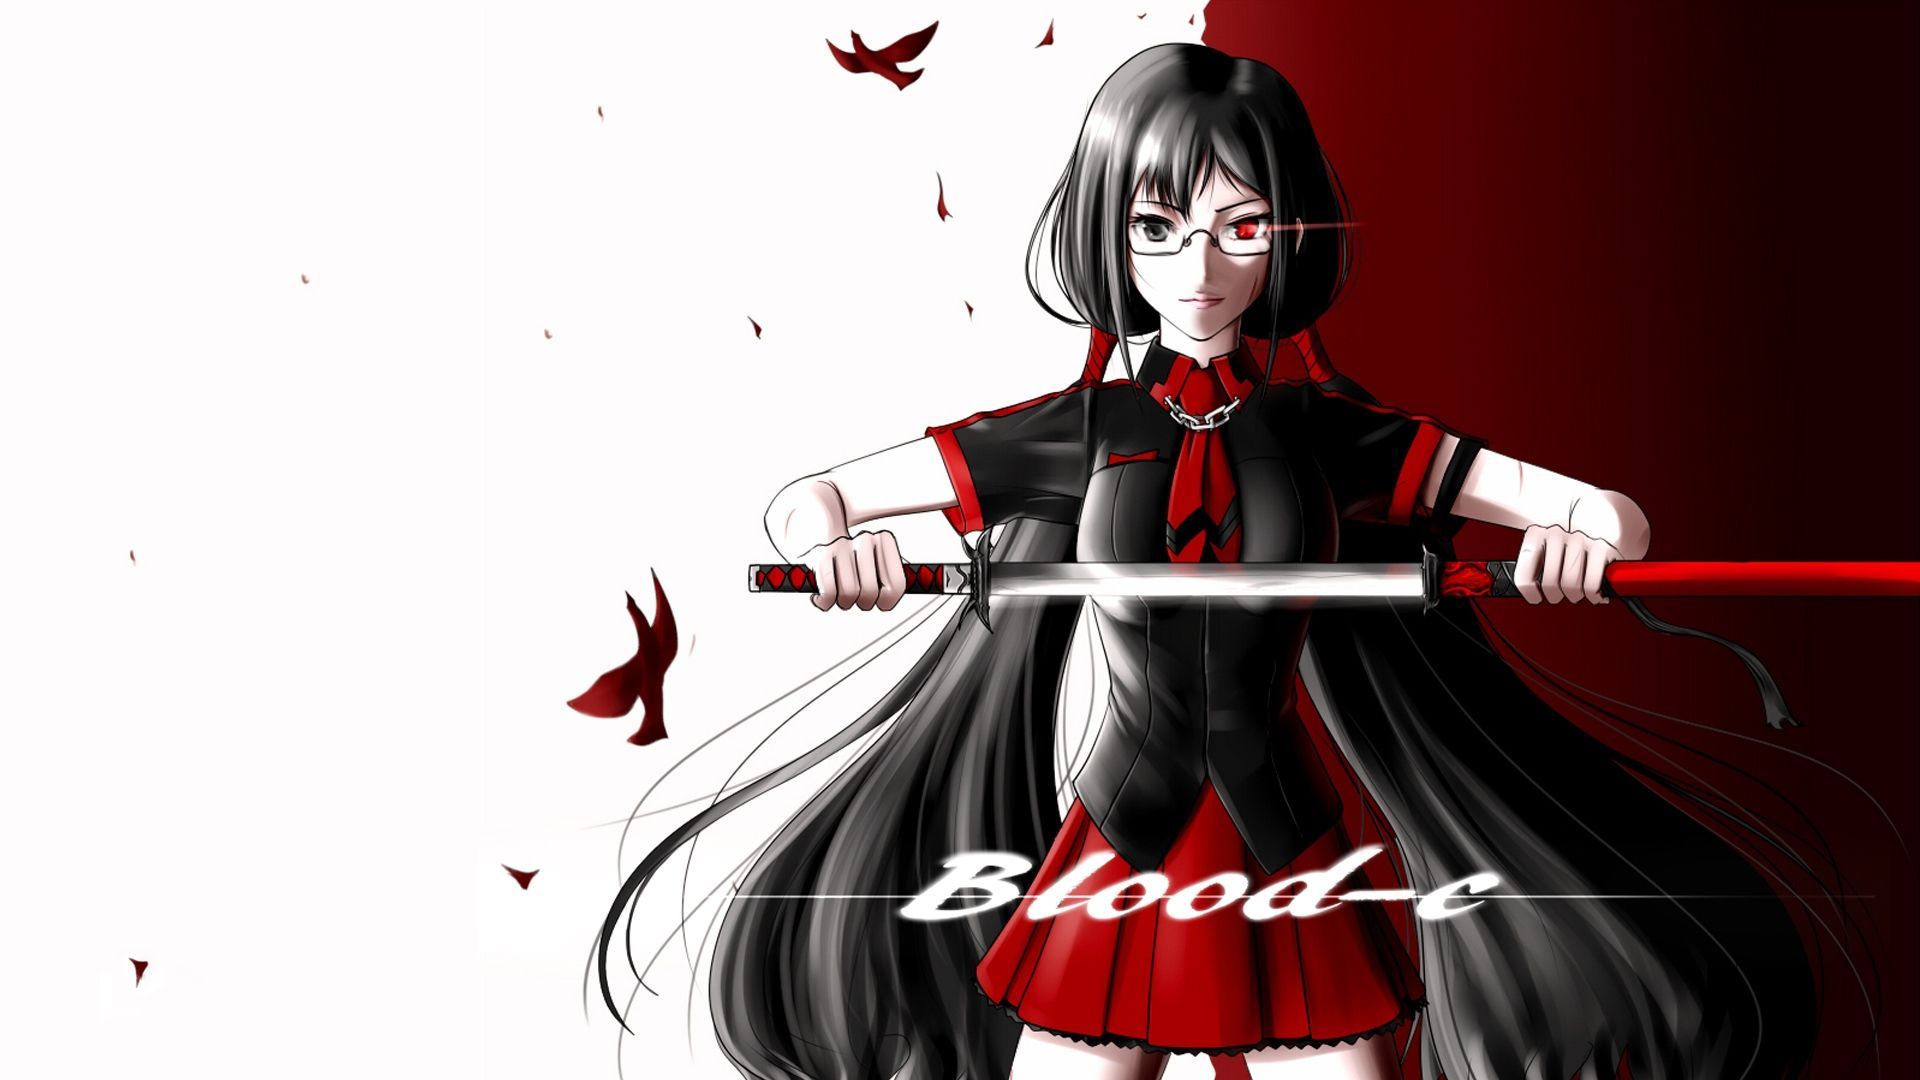 Blood C Wallpaper Background #blood #c #wallpaper. Blood c